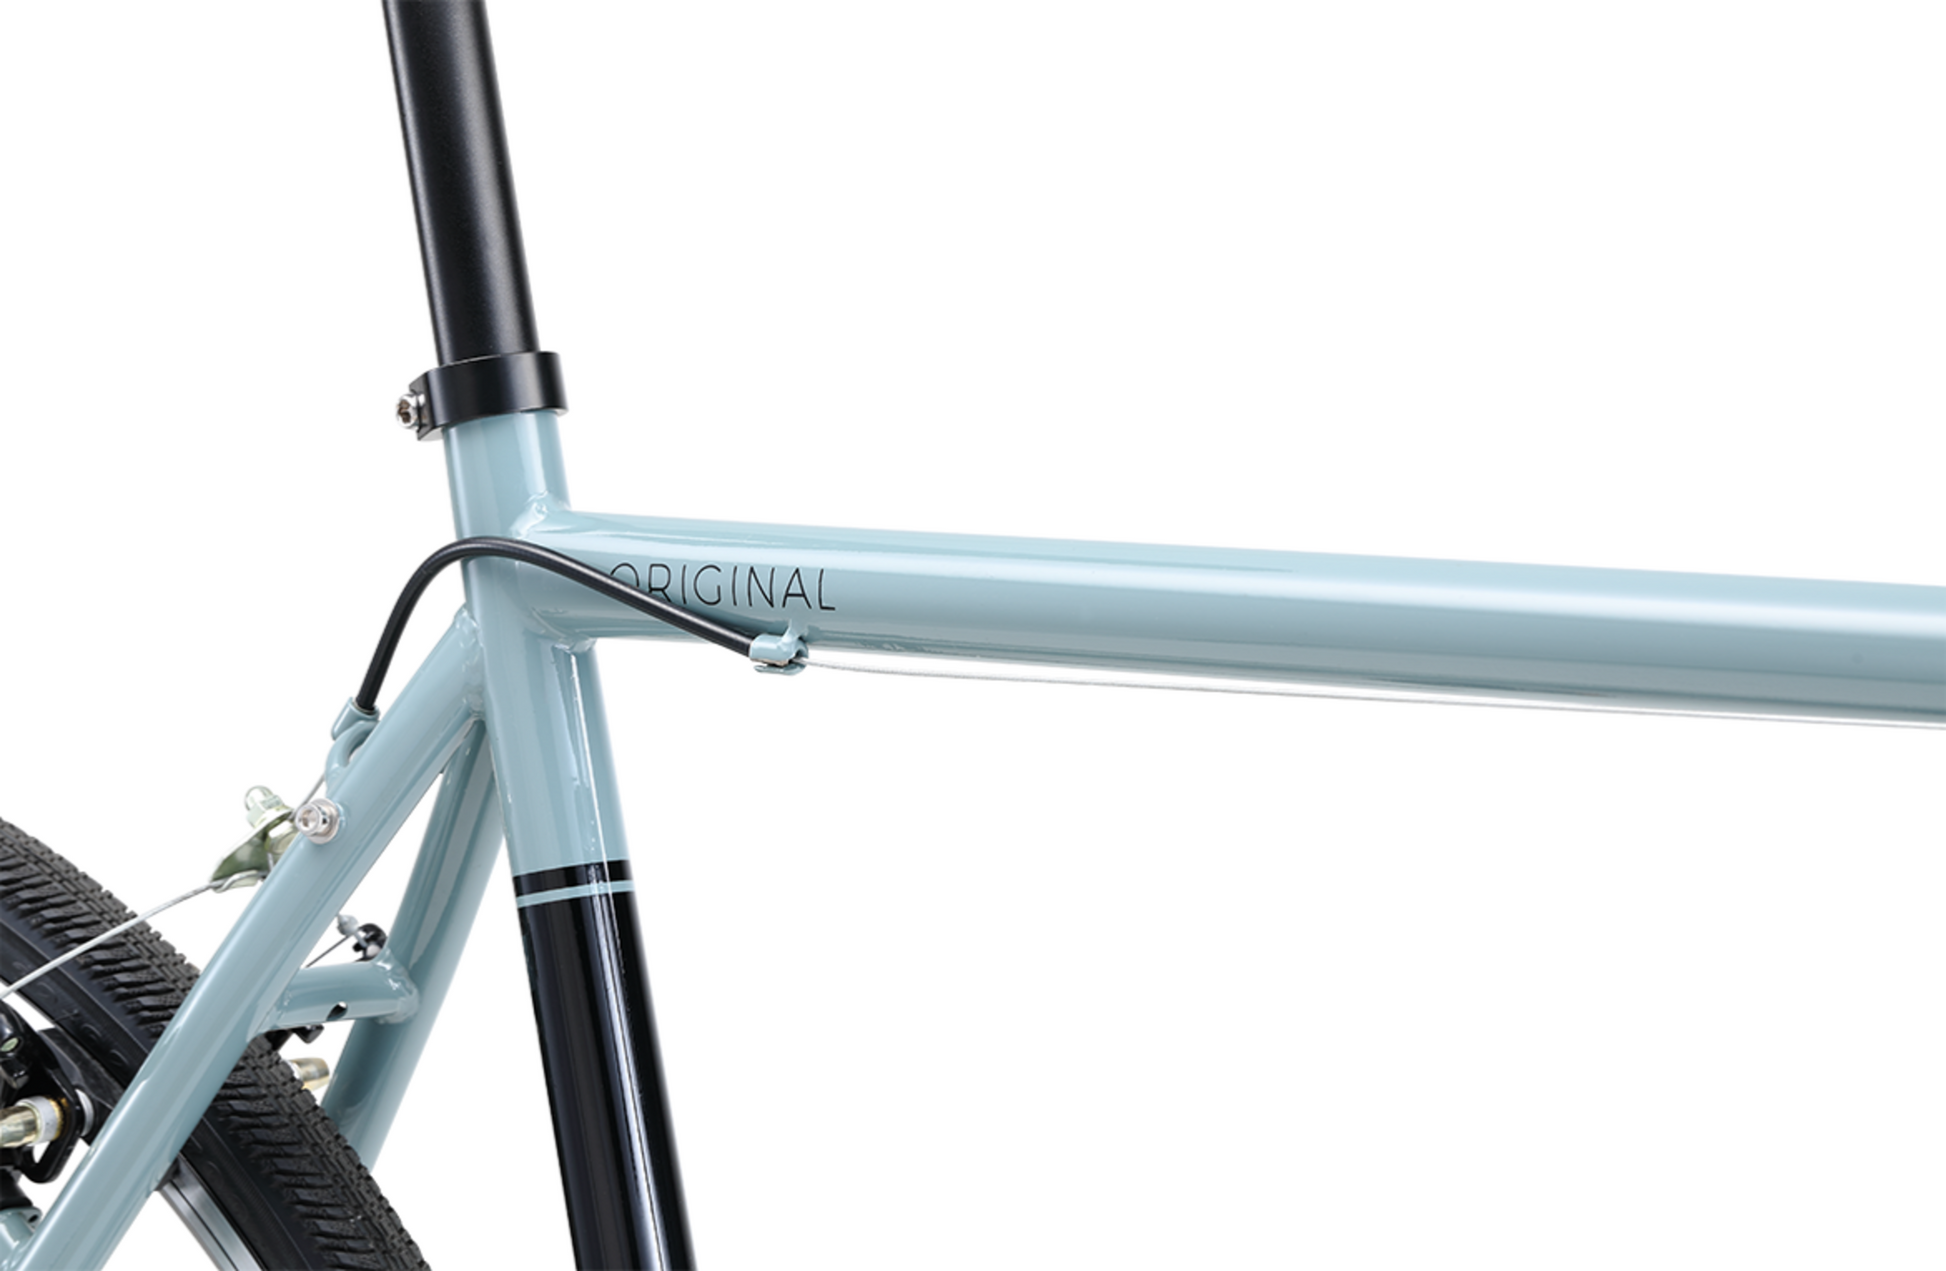 Original Gravel Bike in grey showing original gravel logo on bike frame from Reid Cycles Australia 